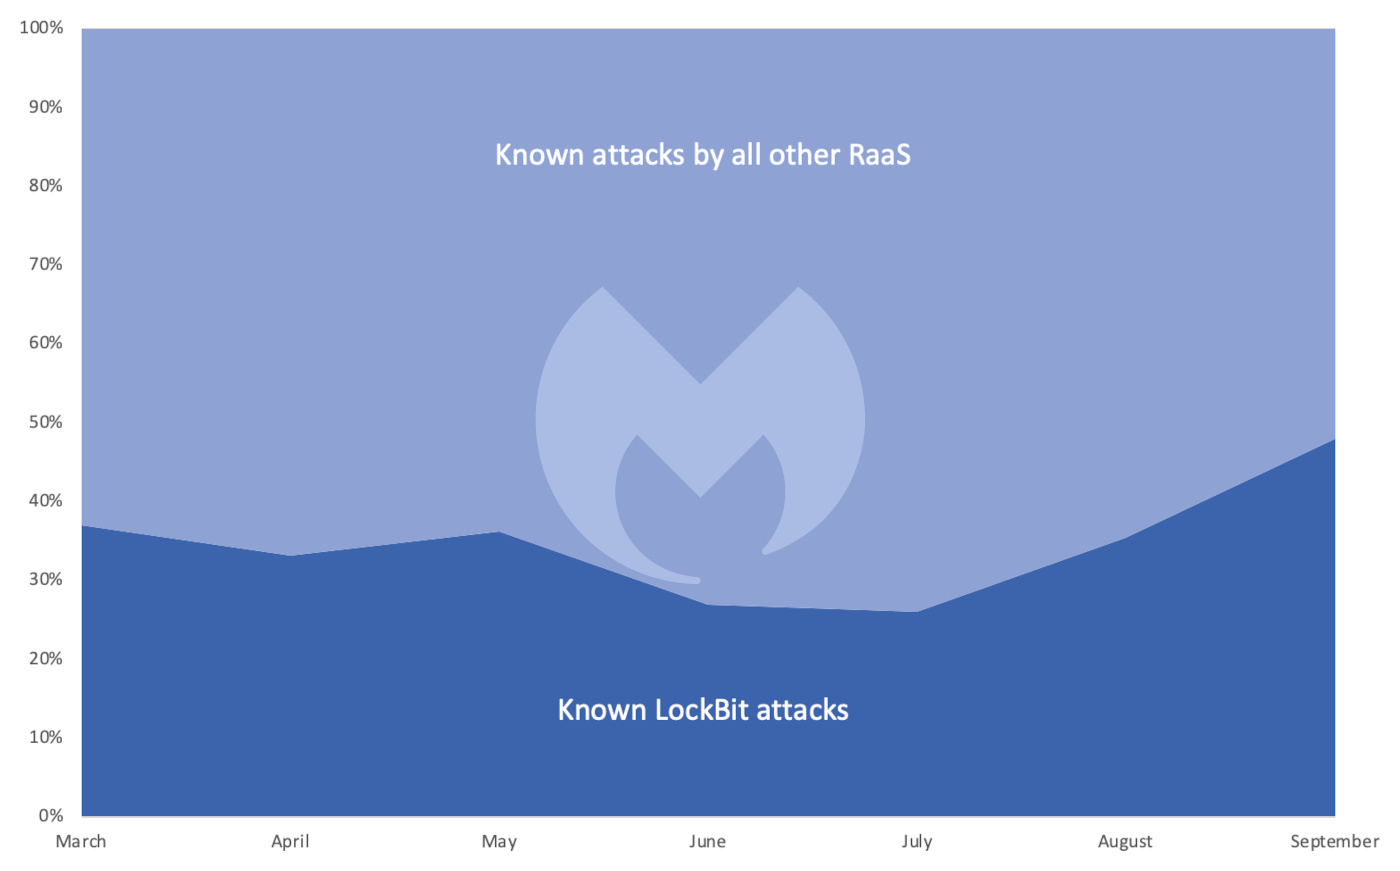 The share of known RaaS attacks involving LockBit